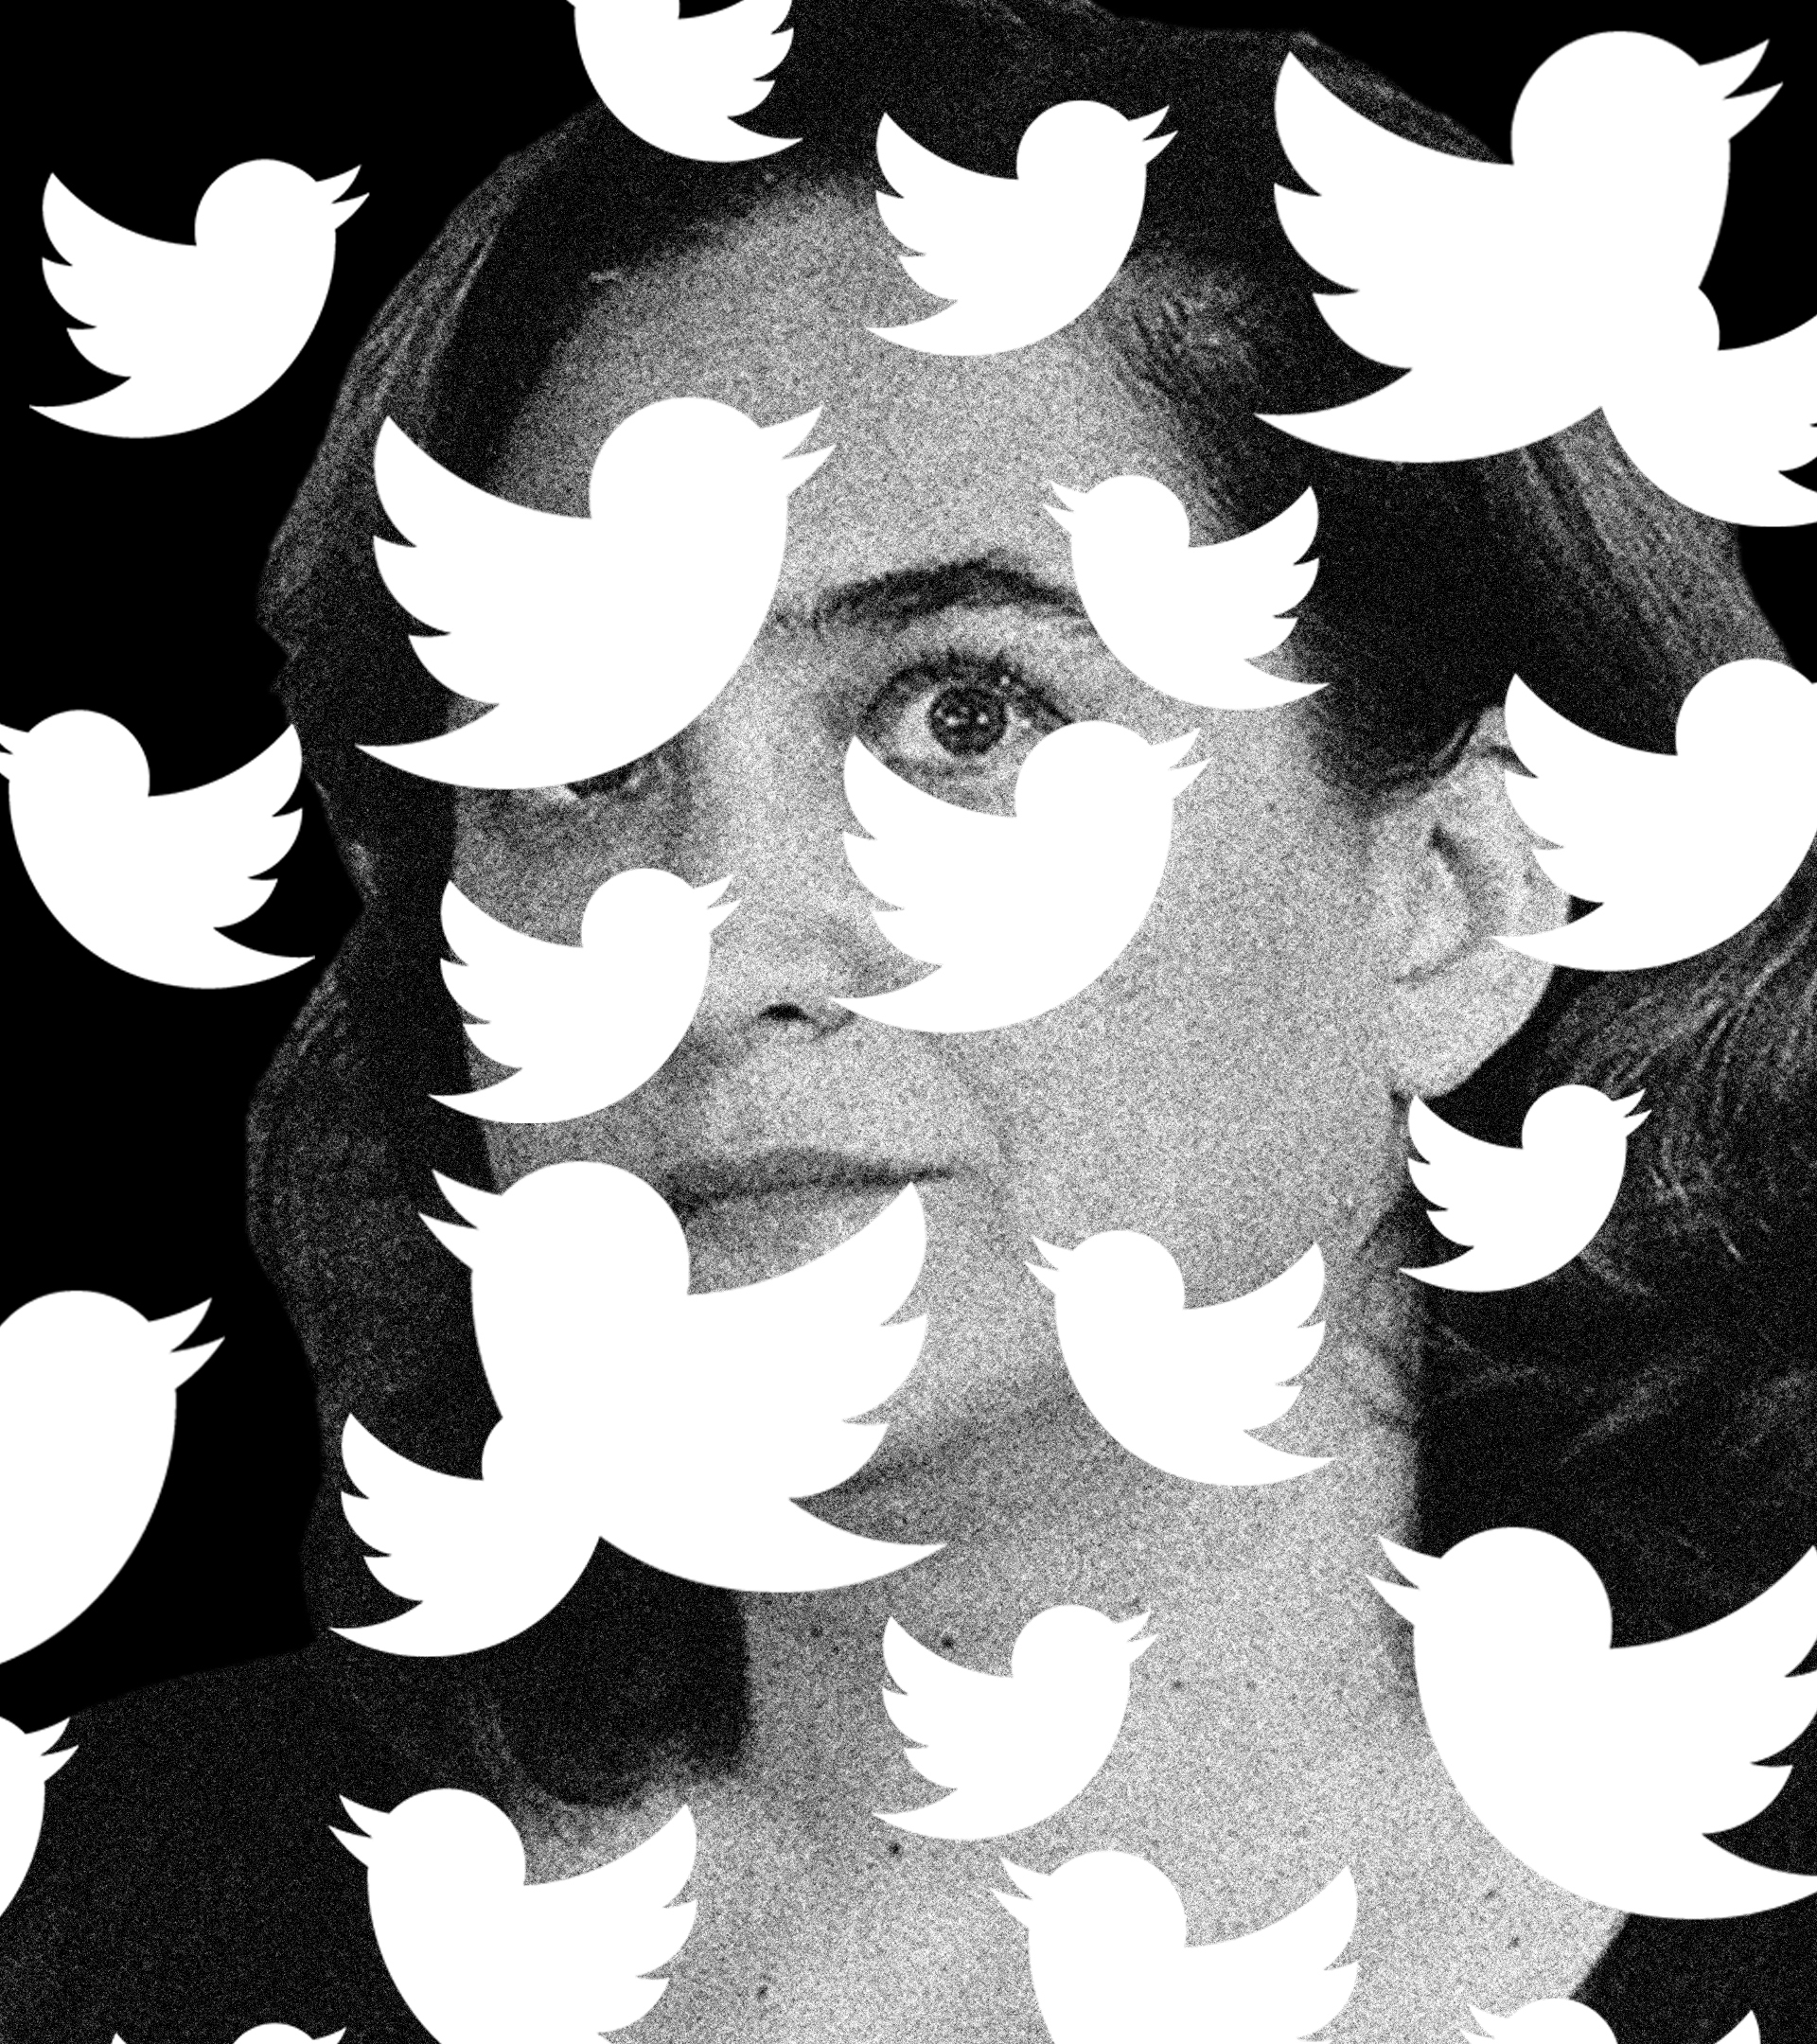 De los escraches virtuales a abandonar Twitter: "Ada Colau es vctima de su propia estrategia"